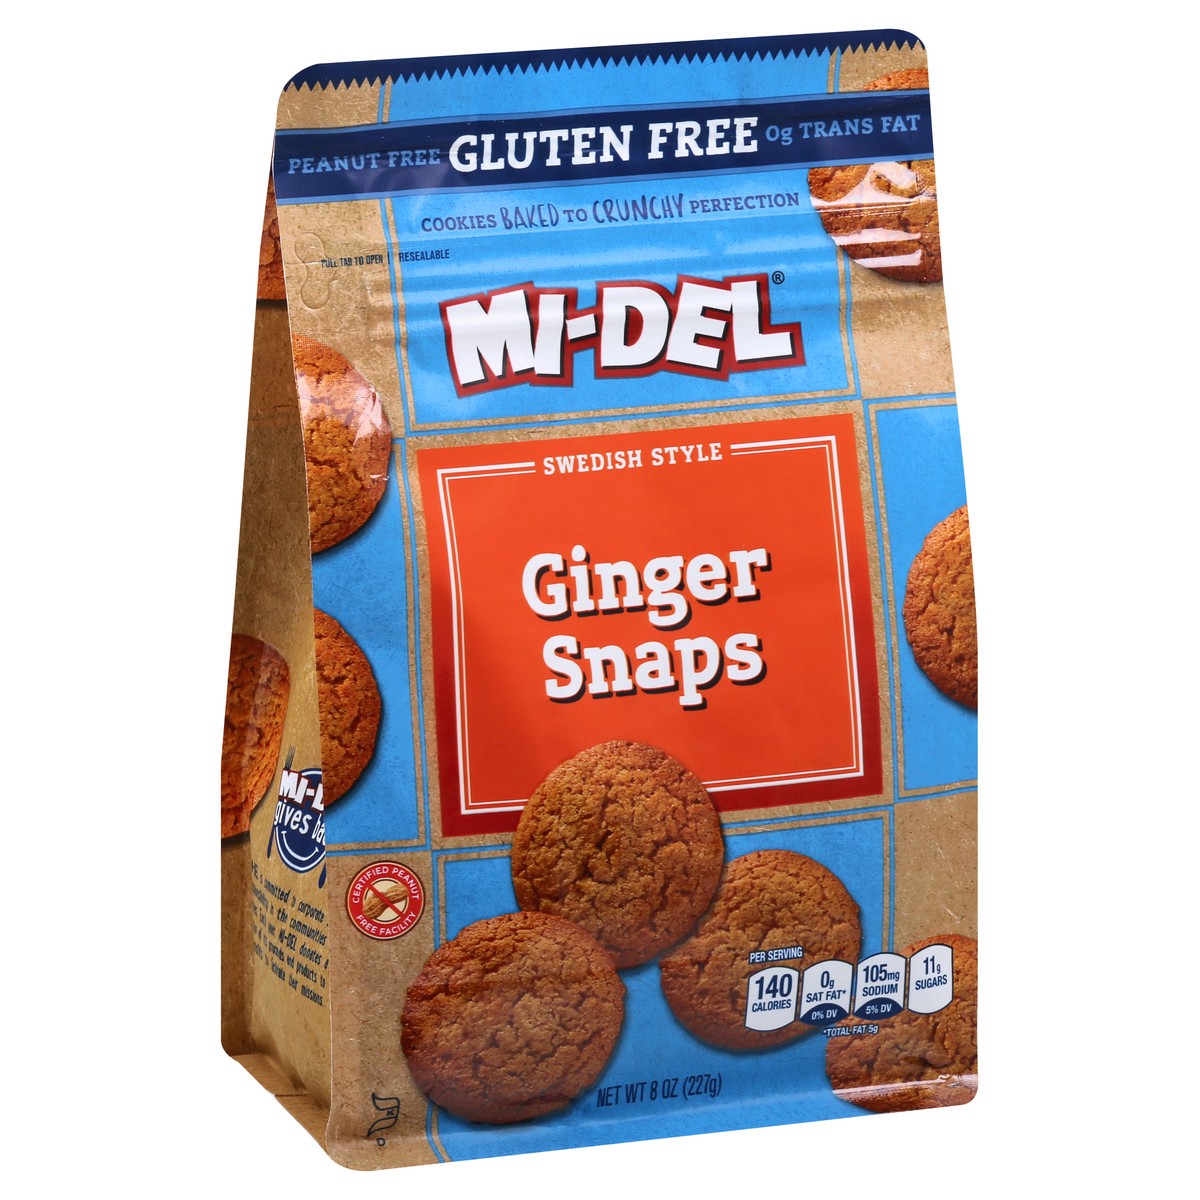 slide 10 of 12, MI-Del Midel Gluten Free Ginger Snaps, 8 oz